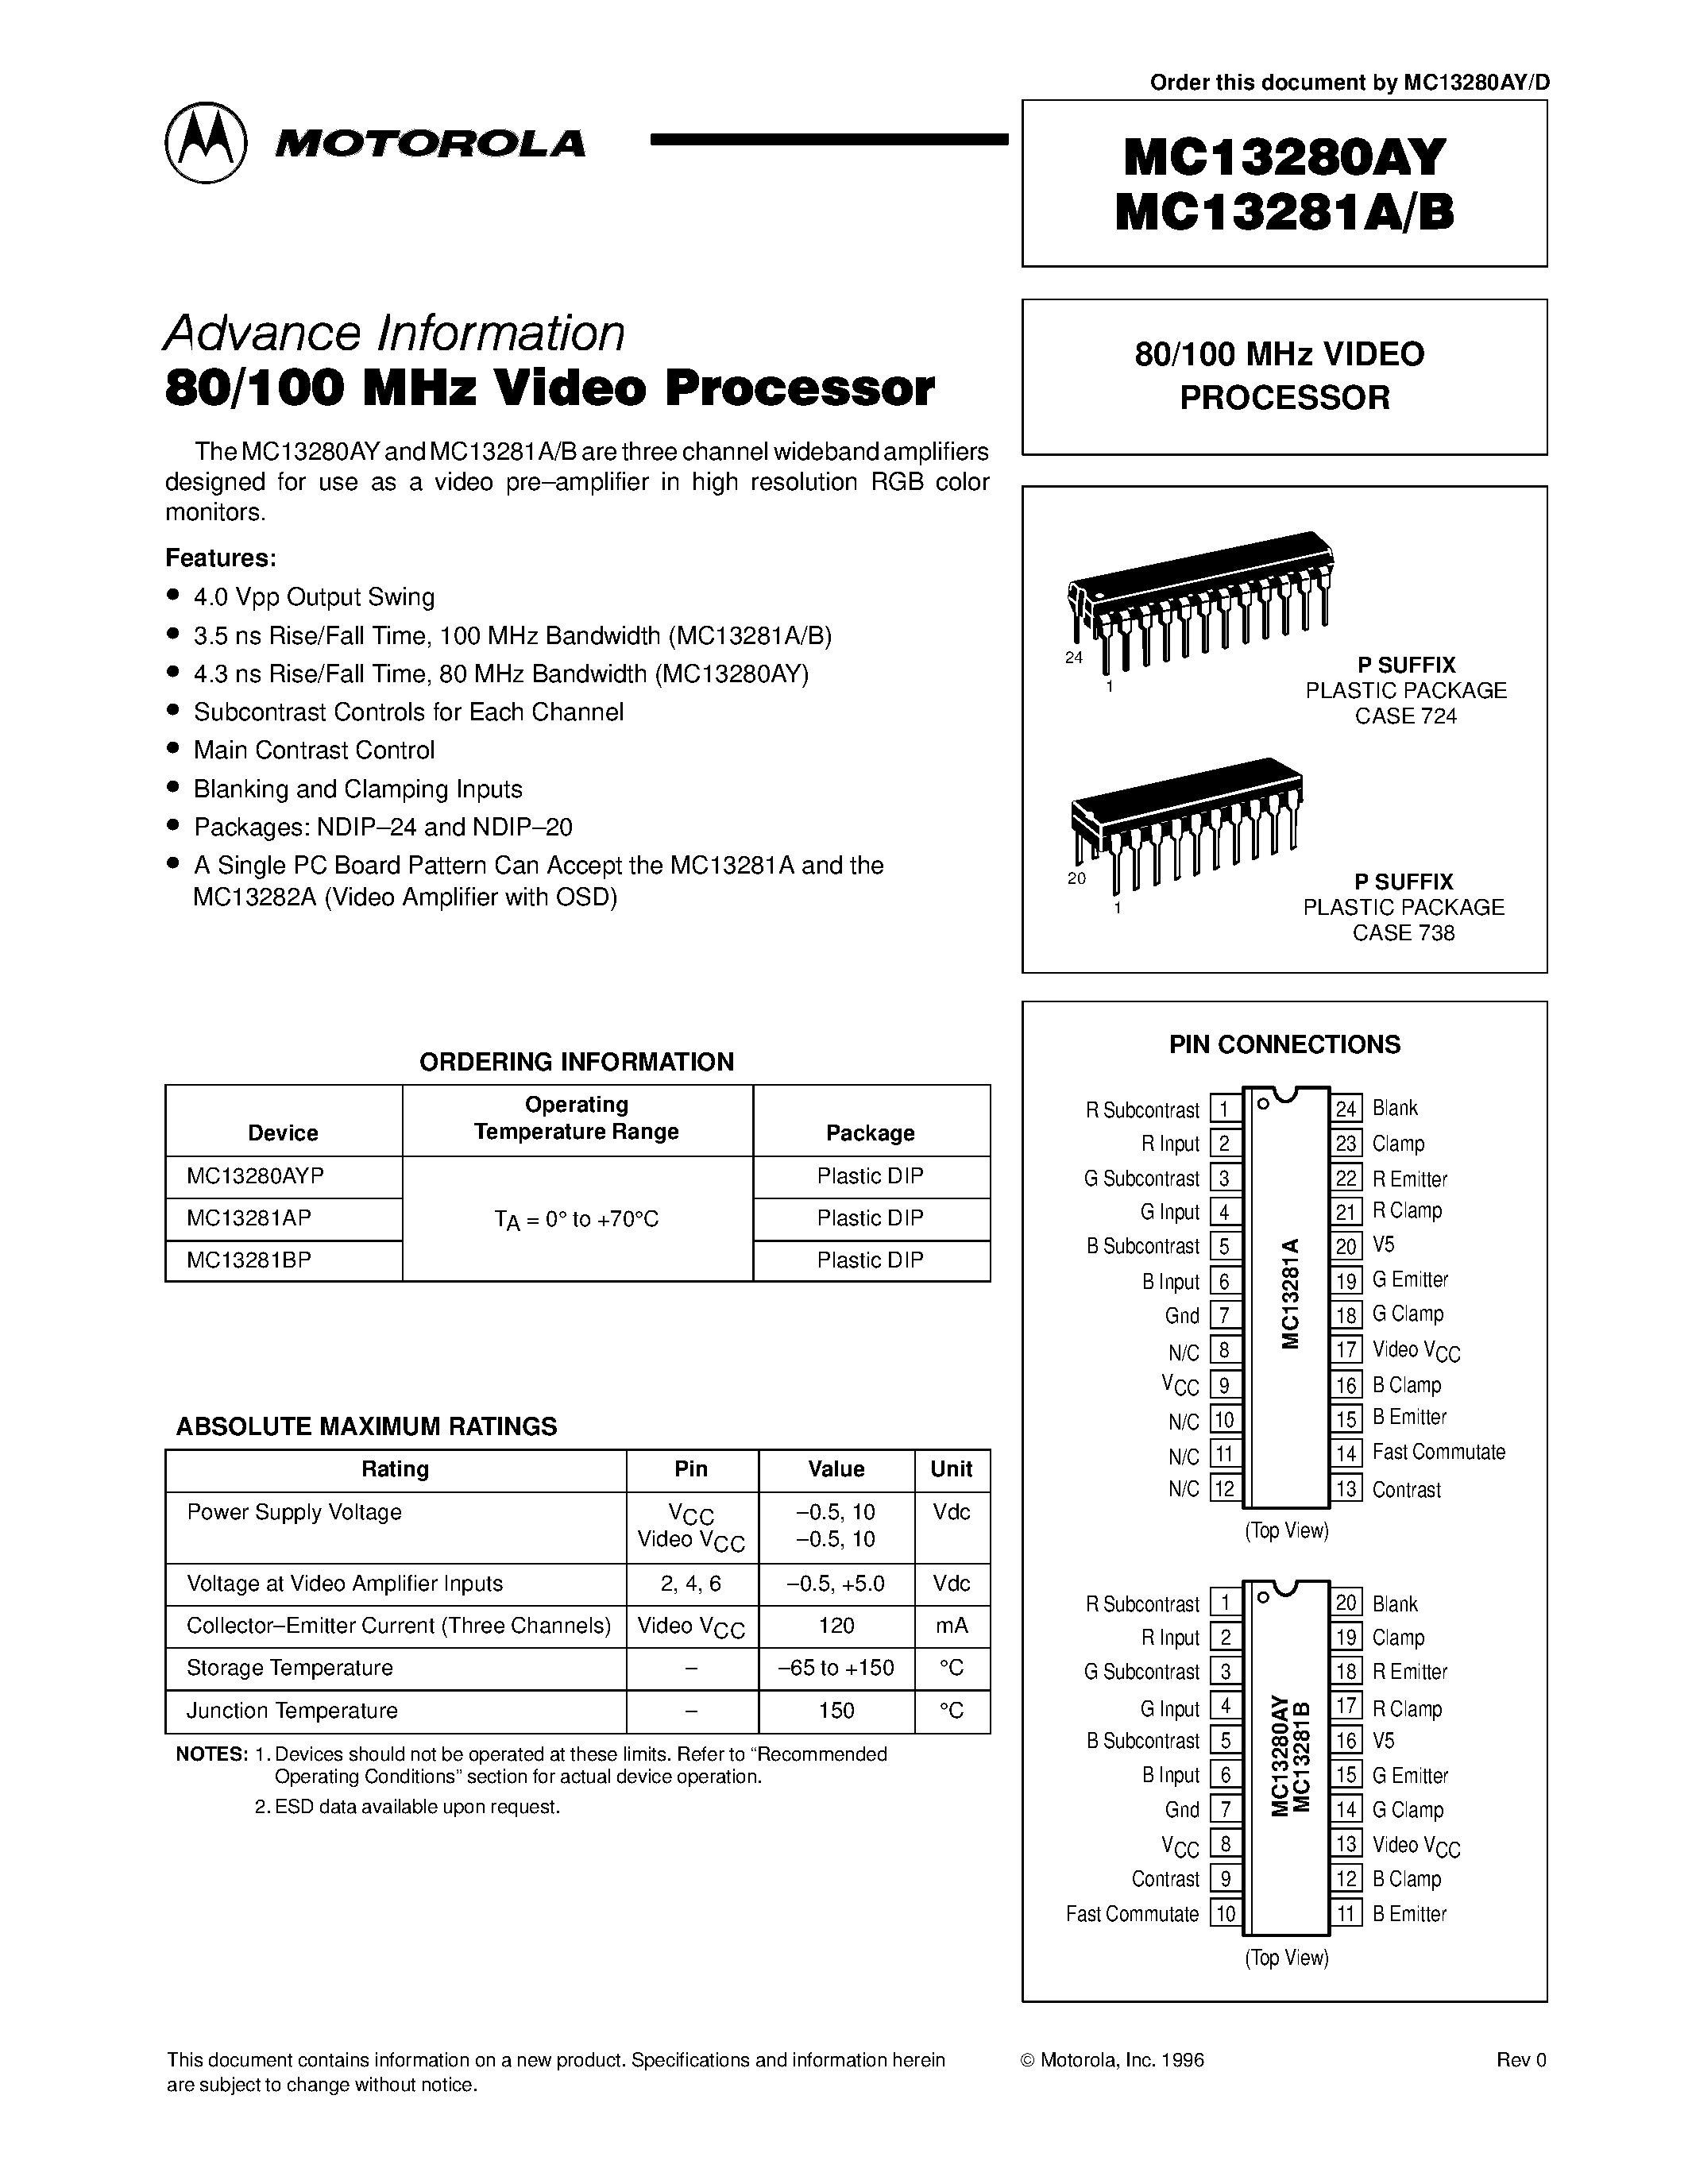 Datasheet MC13281BP - 80/100 MHz VIDEO PROCESSOR page 1